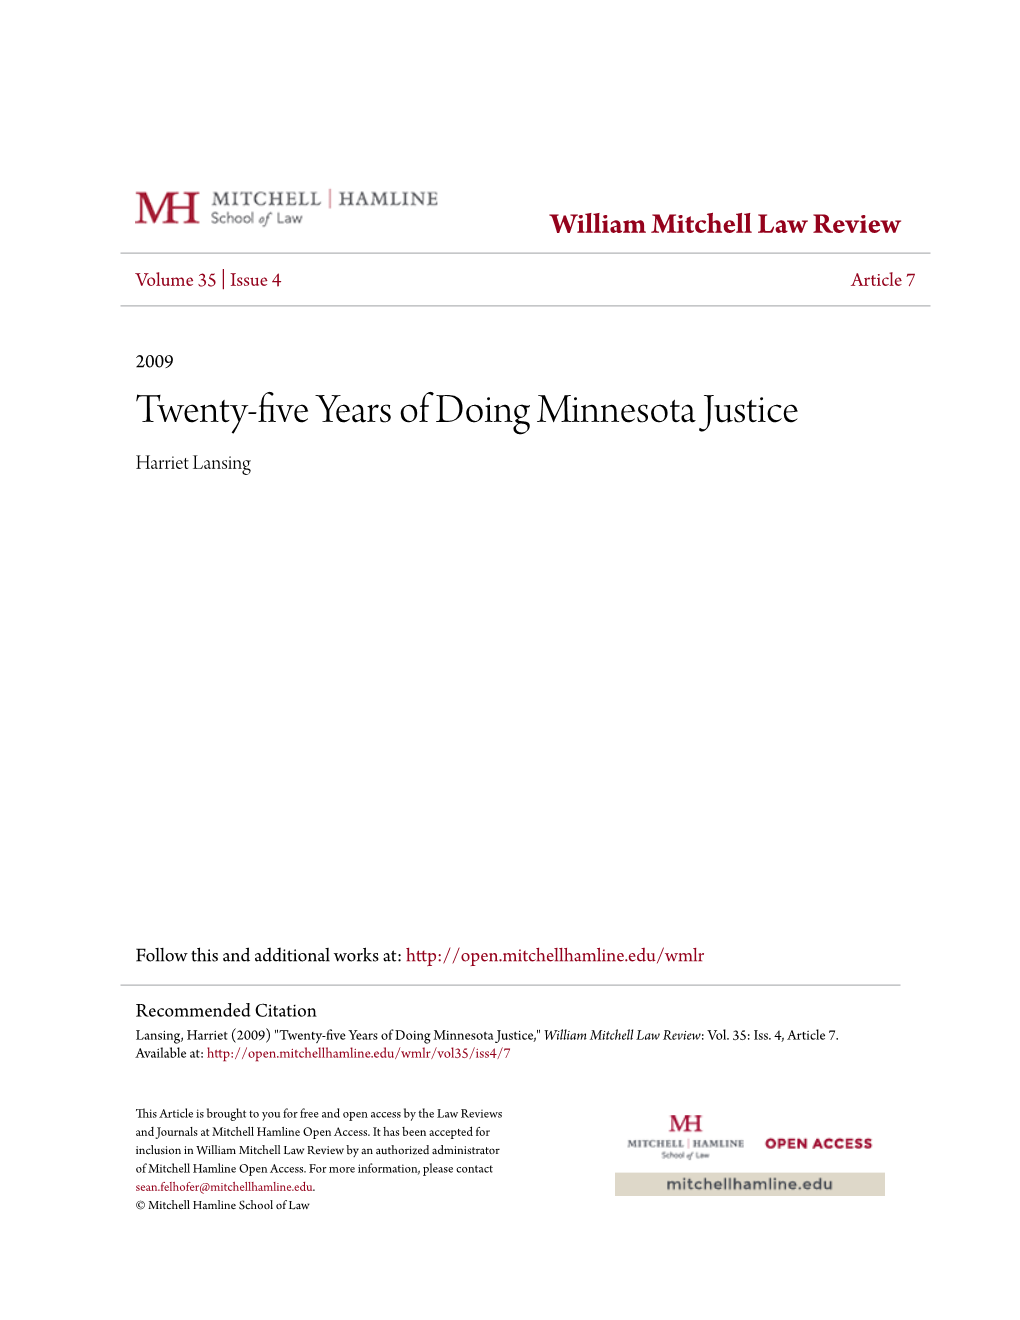 Twenty-Five Years of Doing Minnesota Justice Harriet Lansing